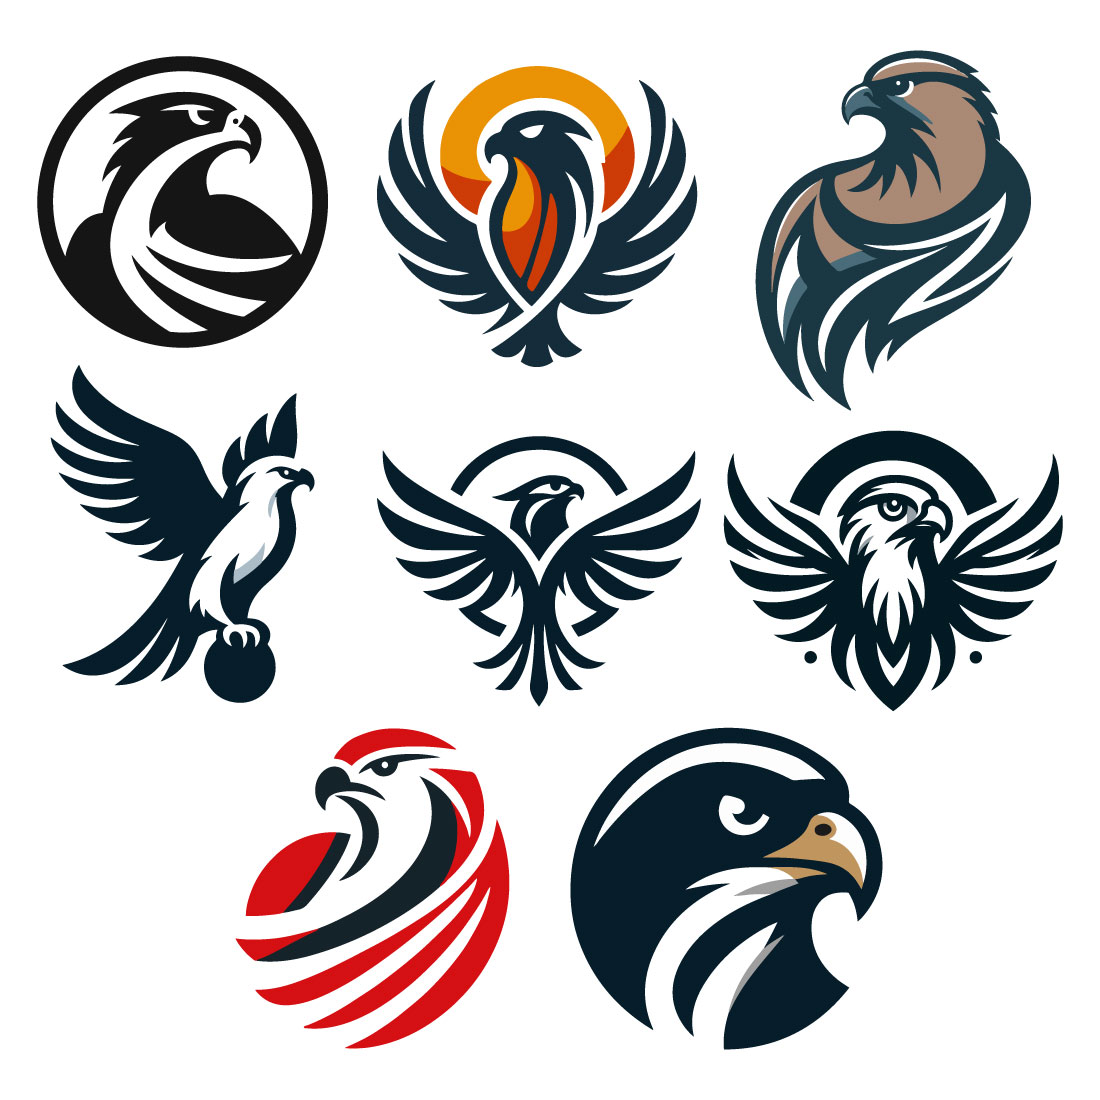 8 Falcon Vector Logos Illustration cover image.